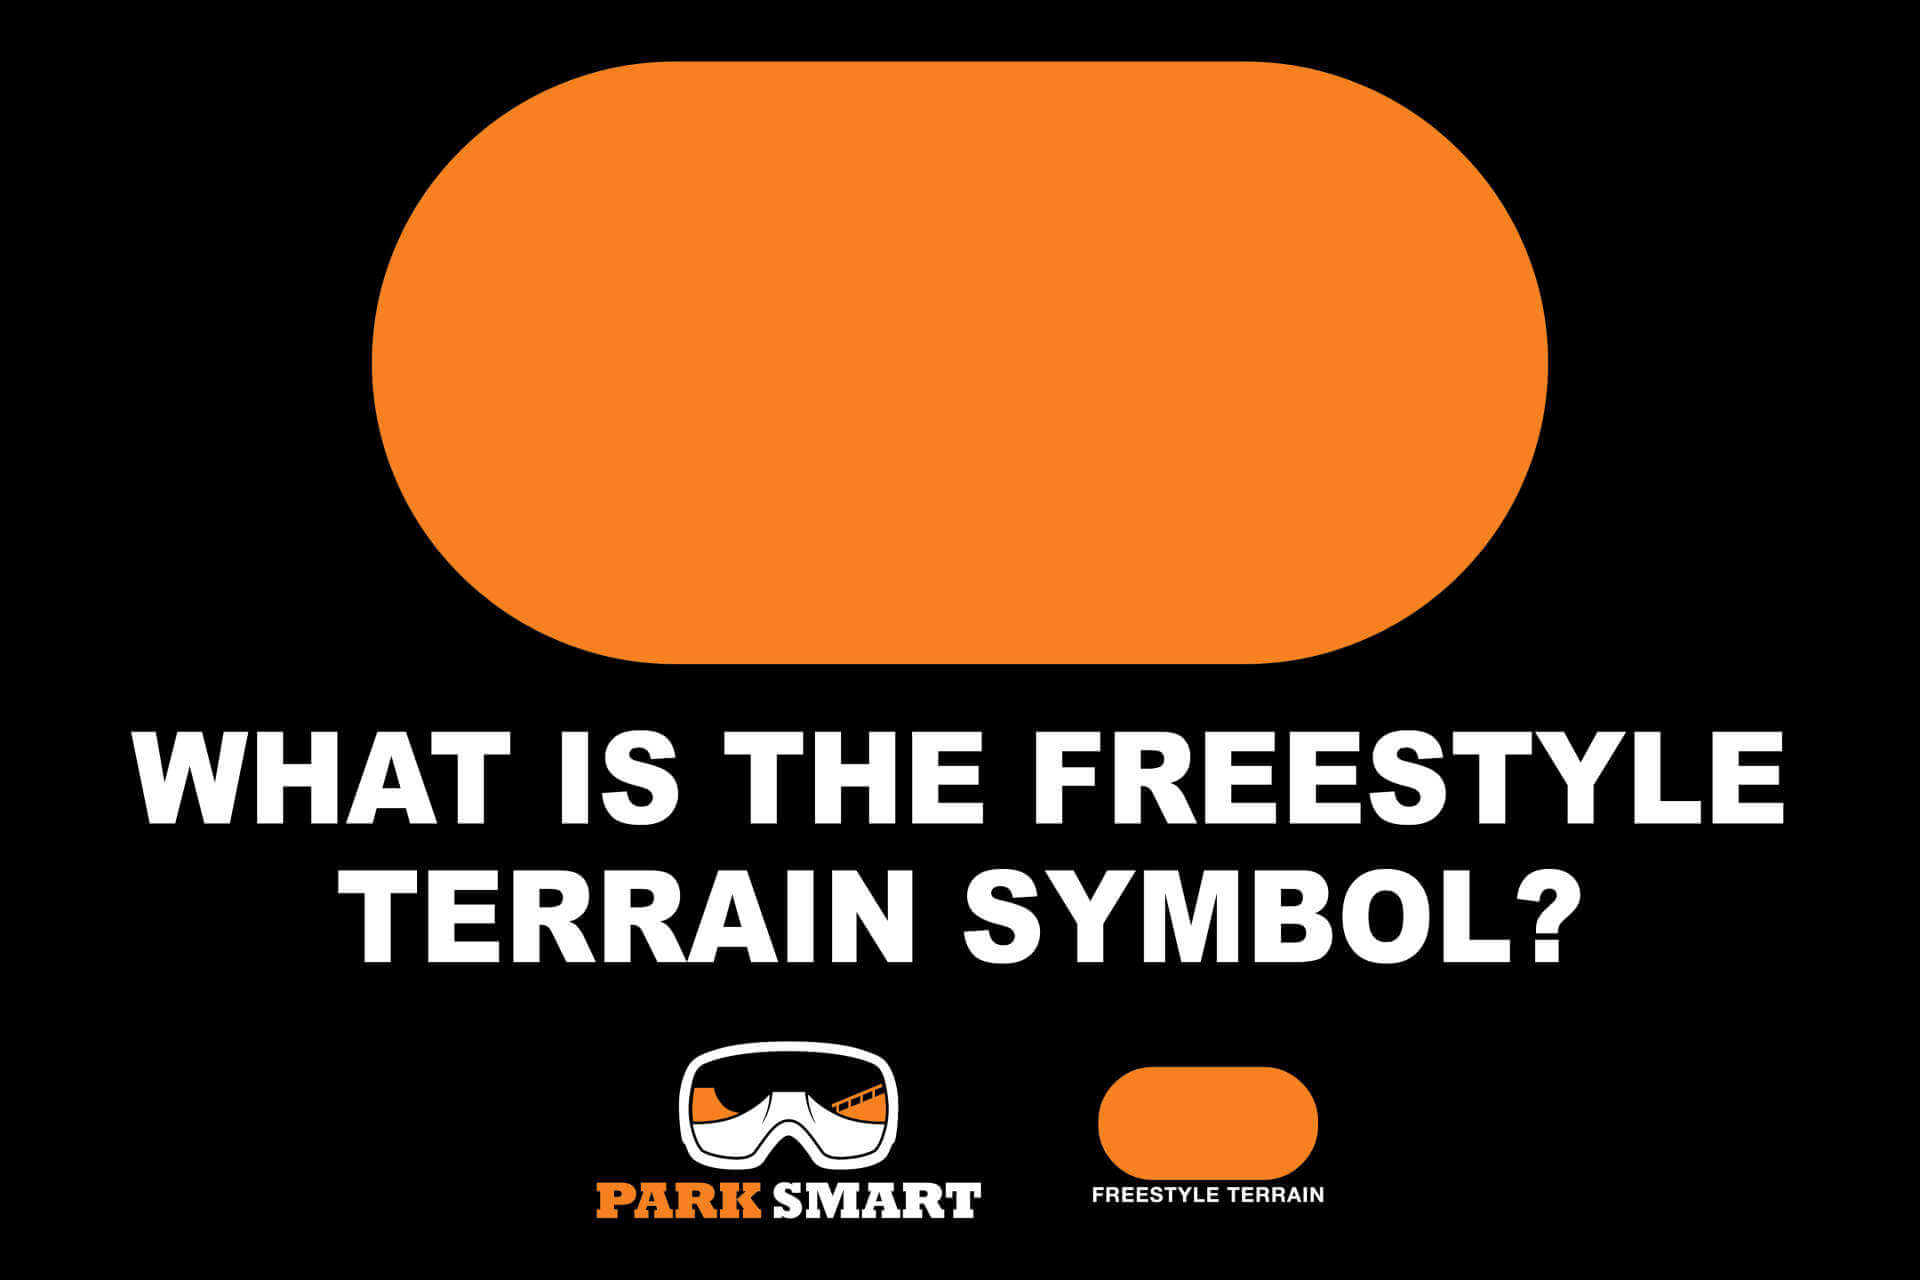 Freestyle terrain symbol